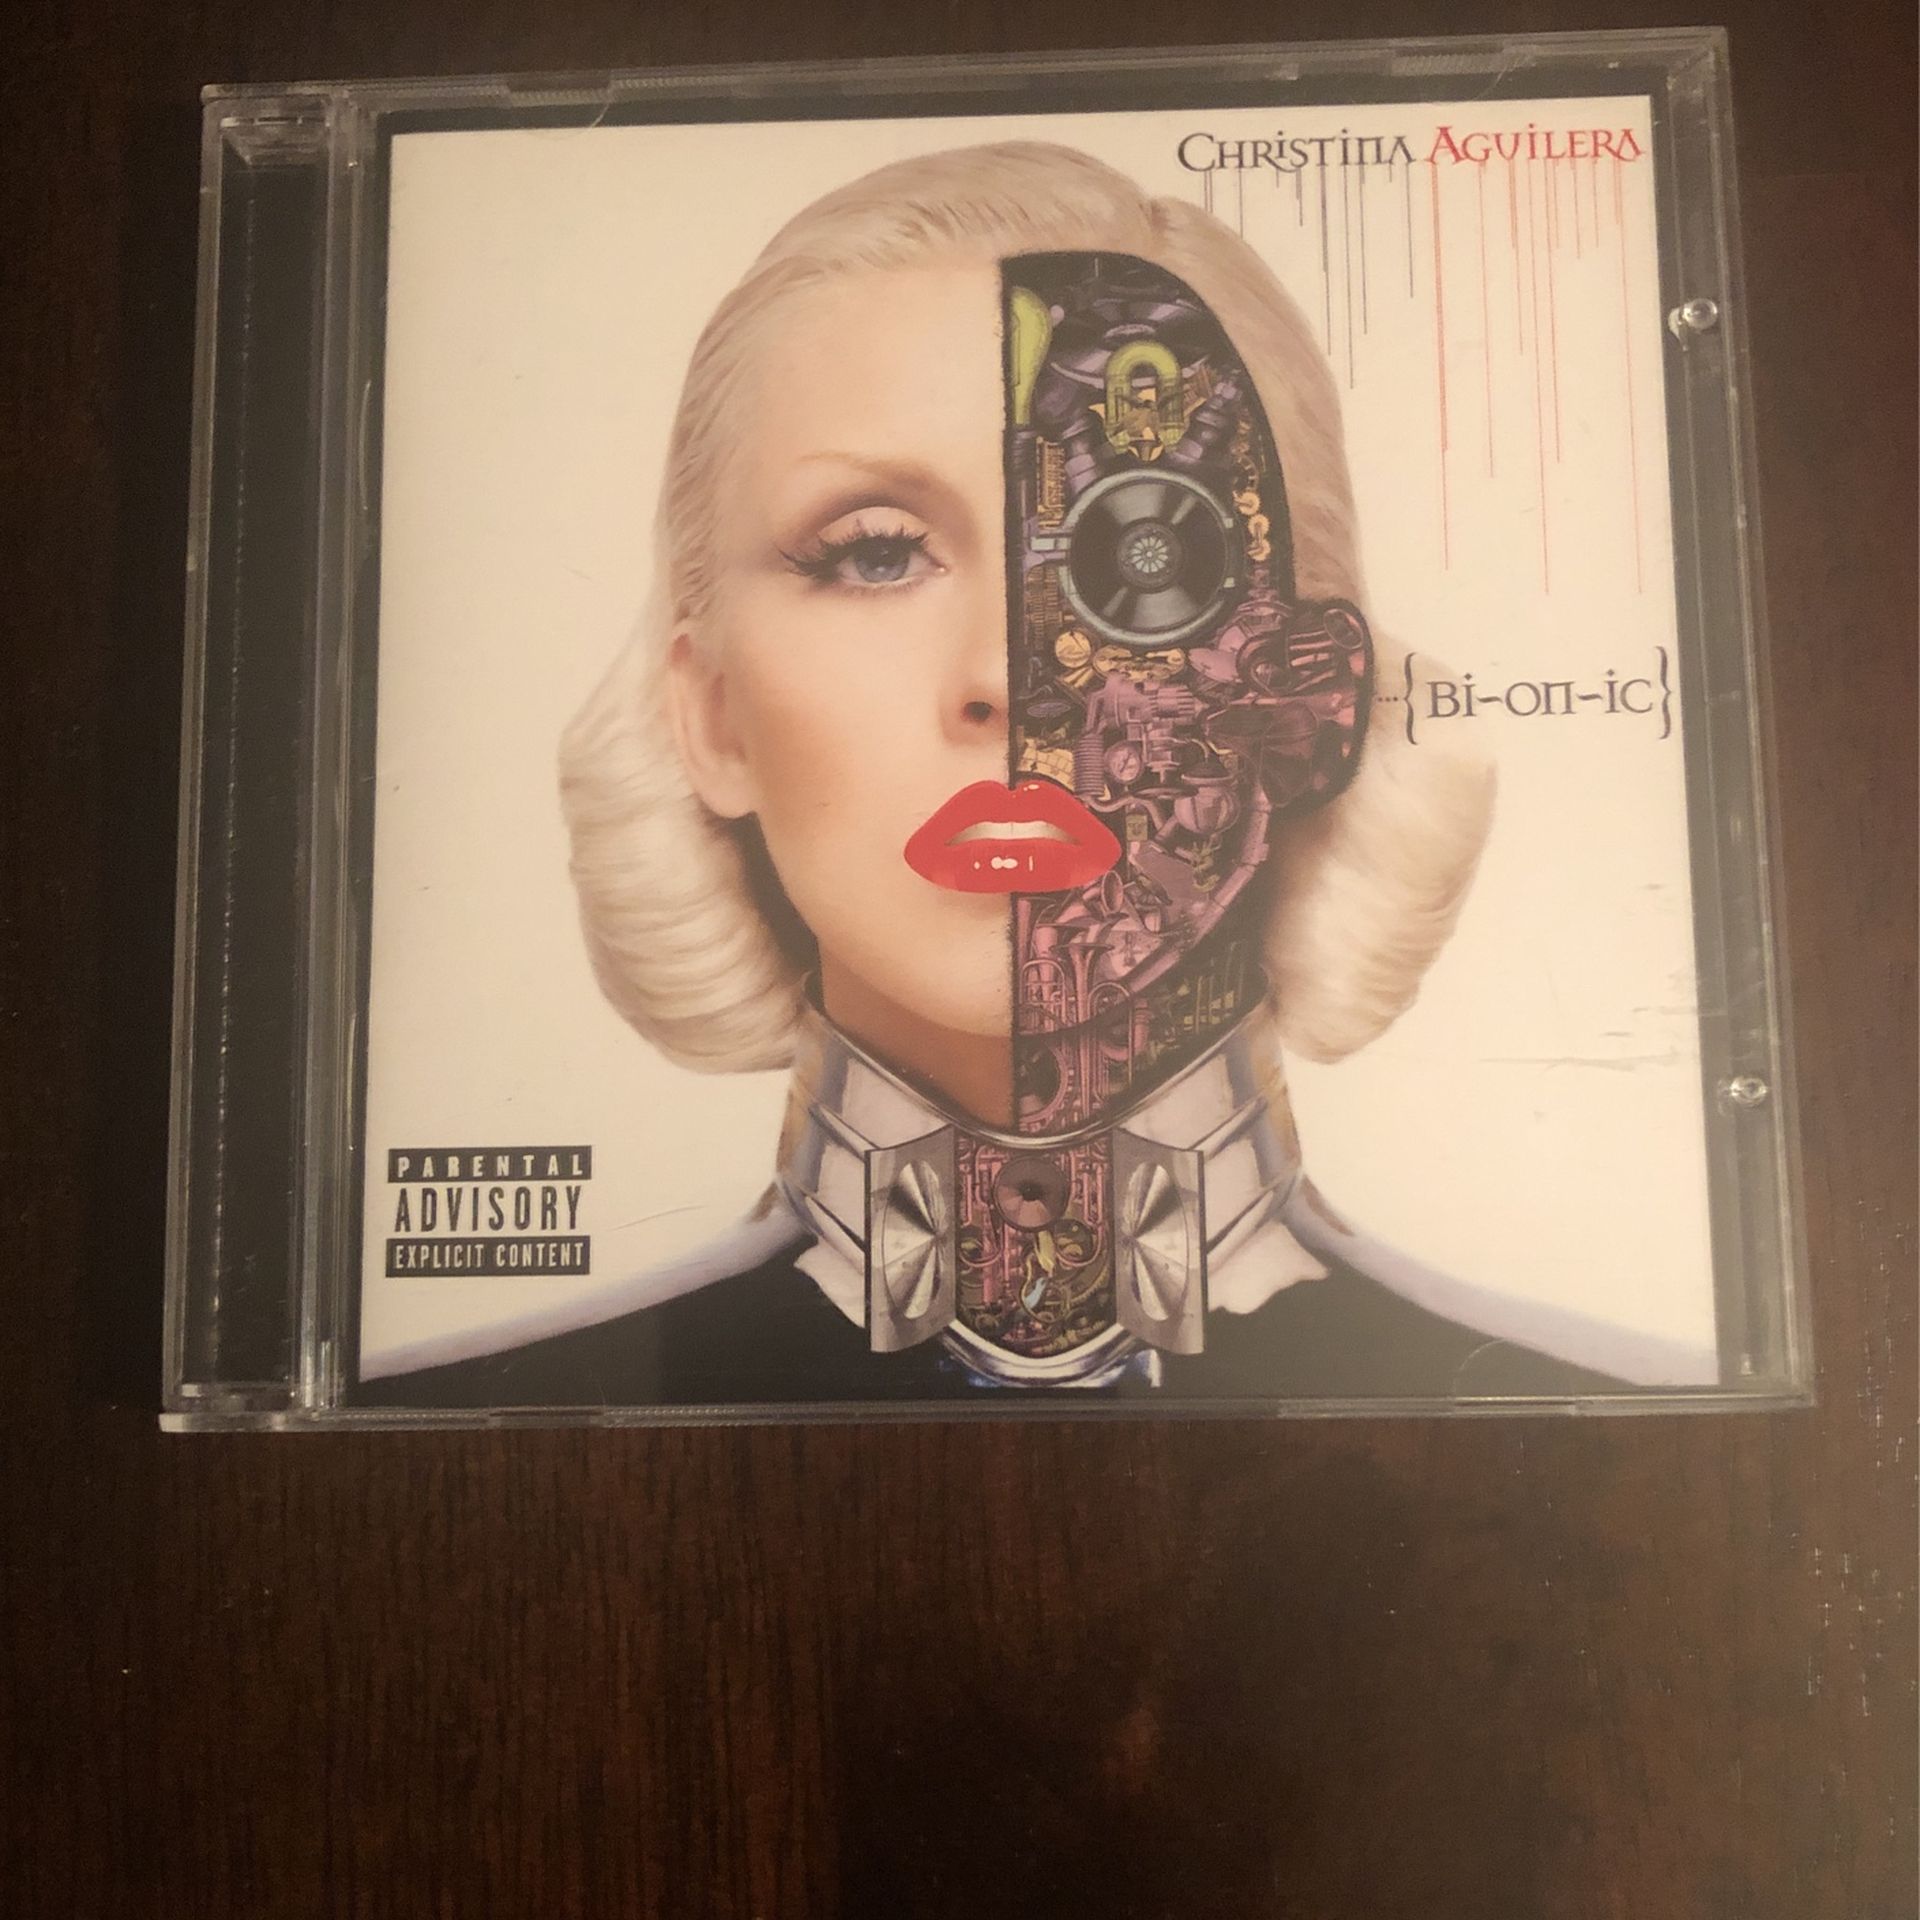 Bionic by Christina Aguilera (CD, 2010)